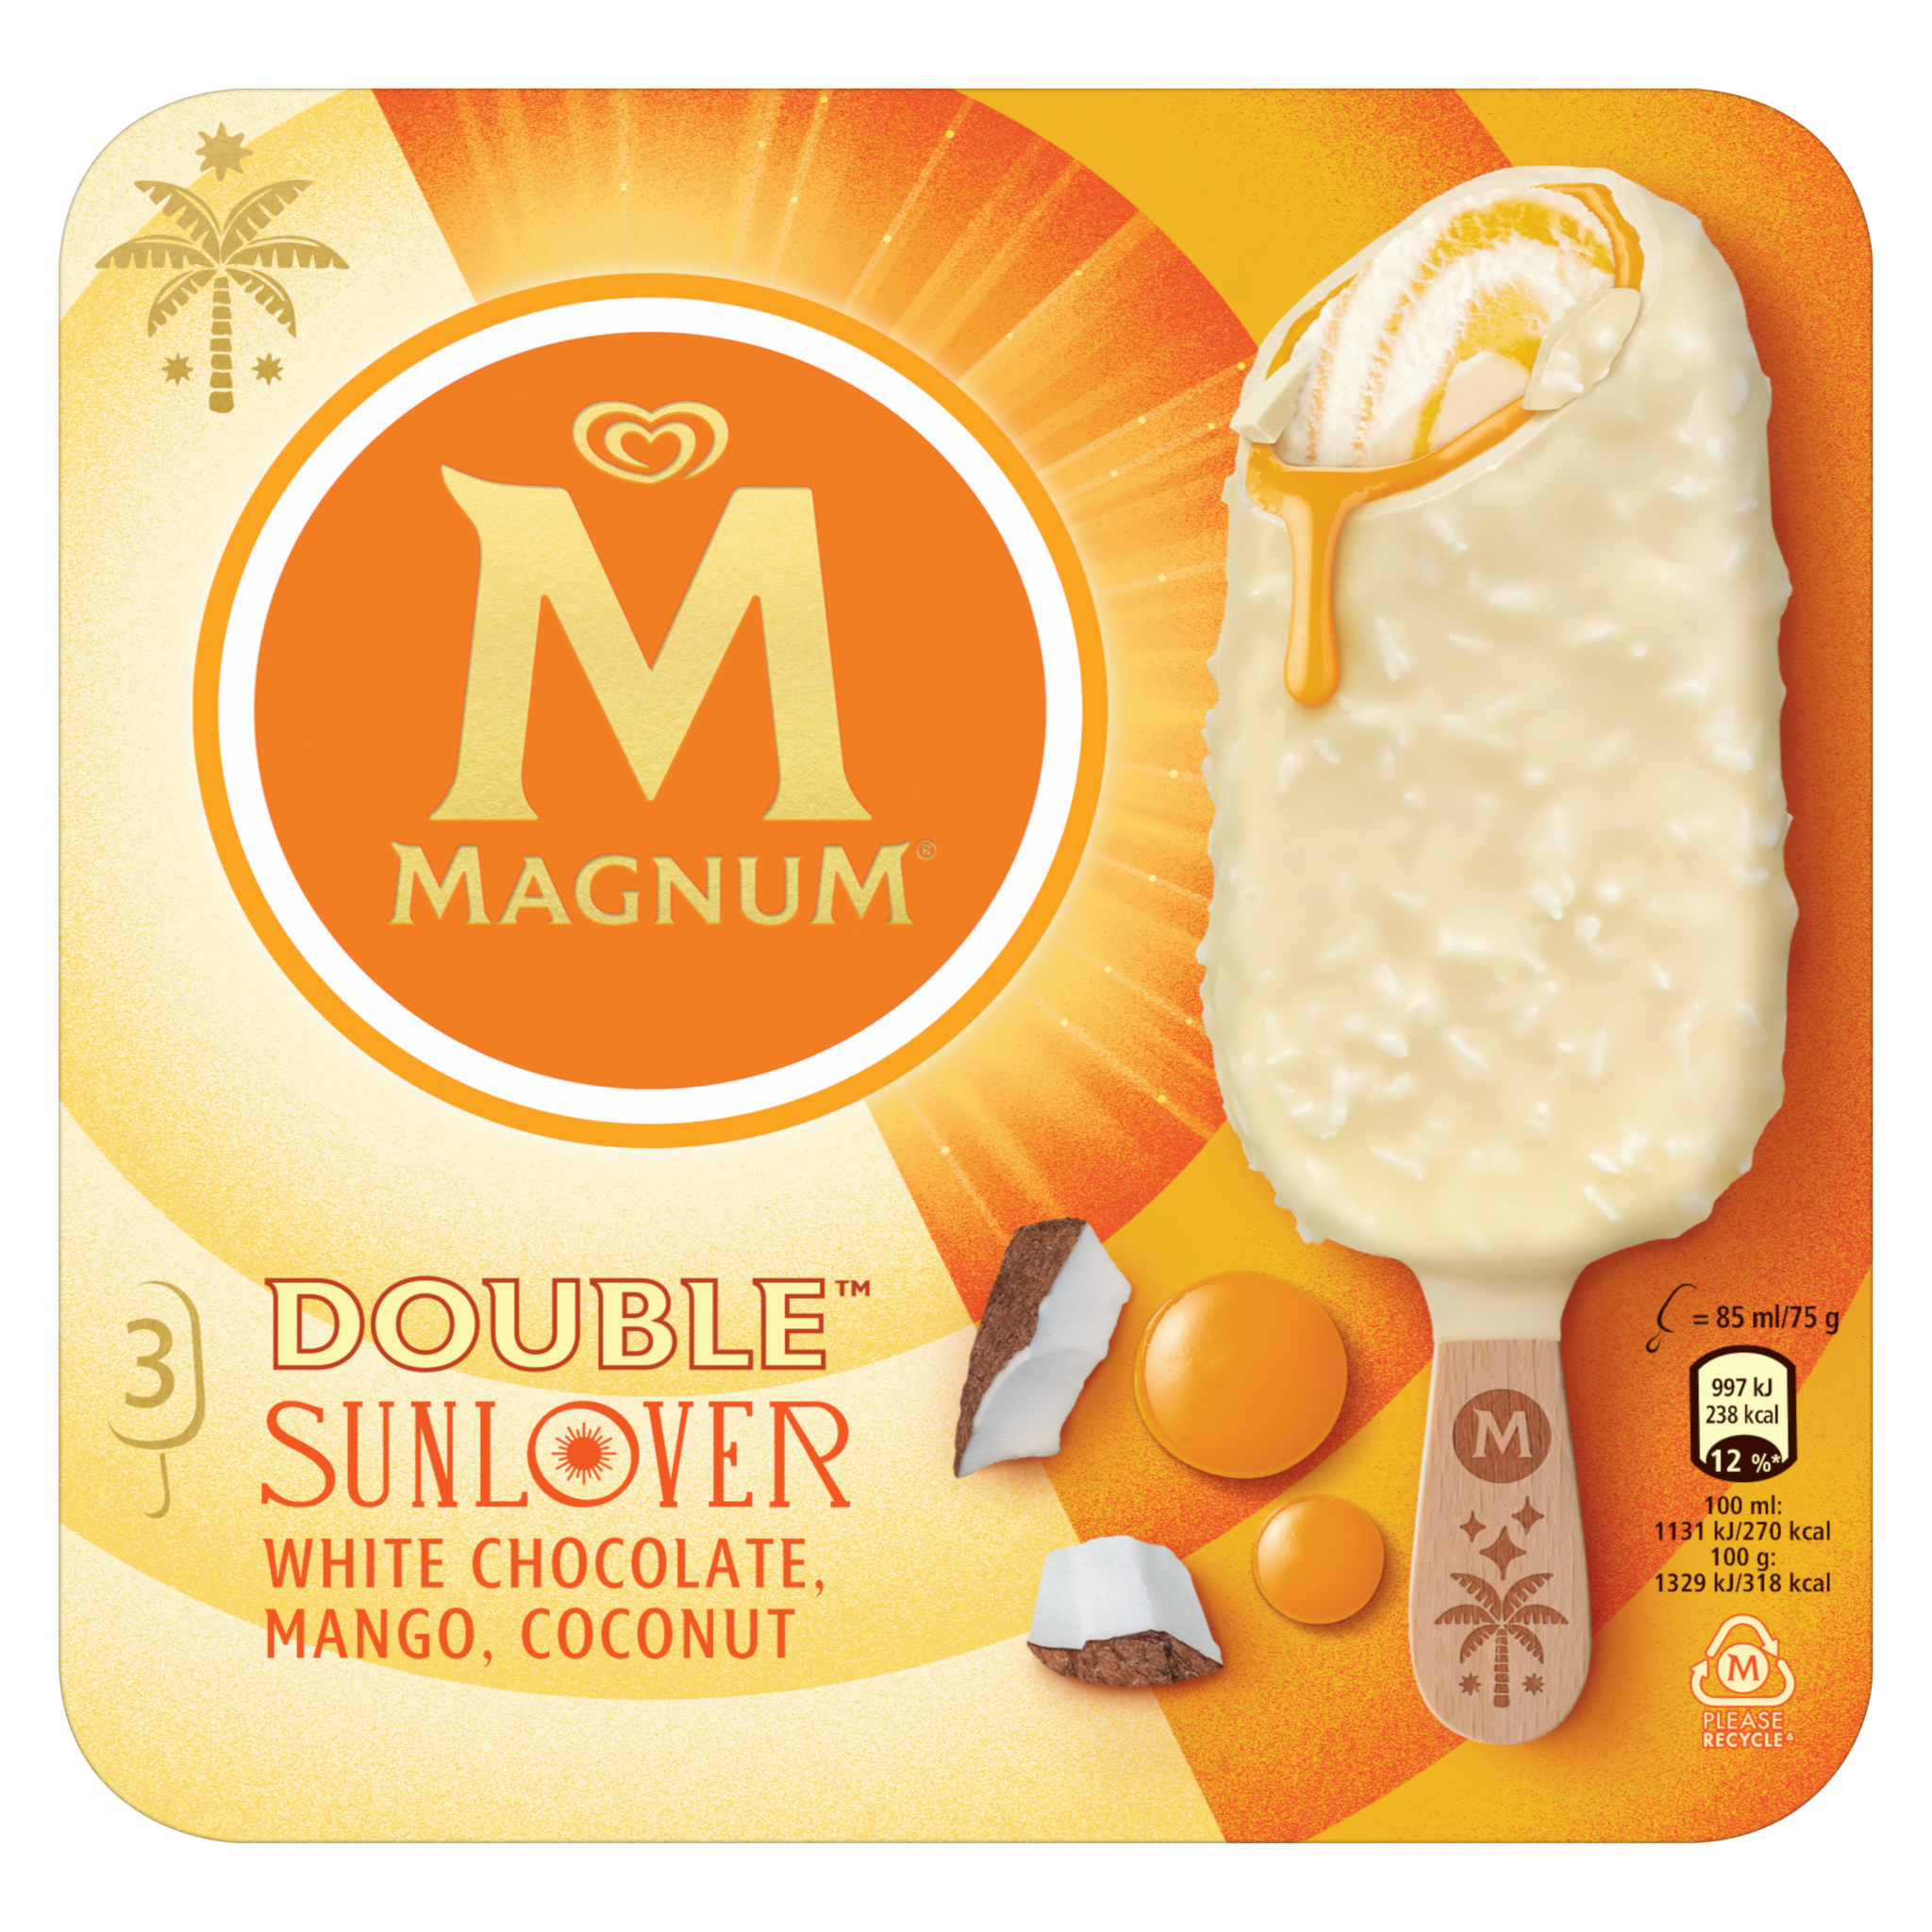 Magnum Double Sunlover Hpk 3 stk – 10 ein í pk